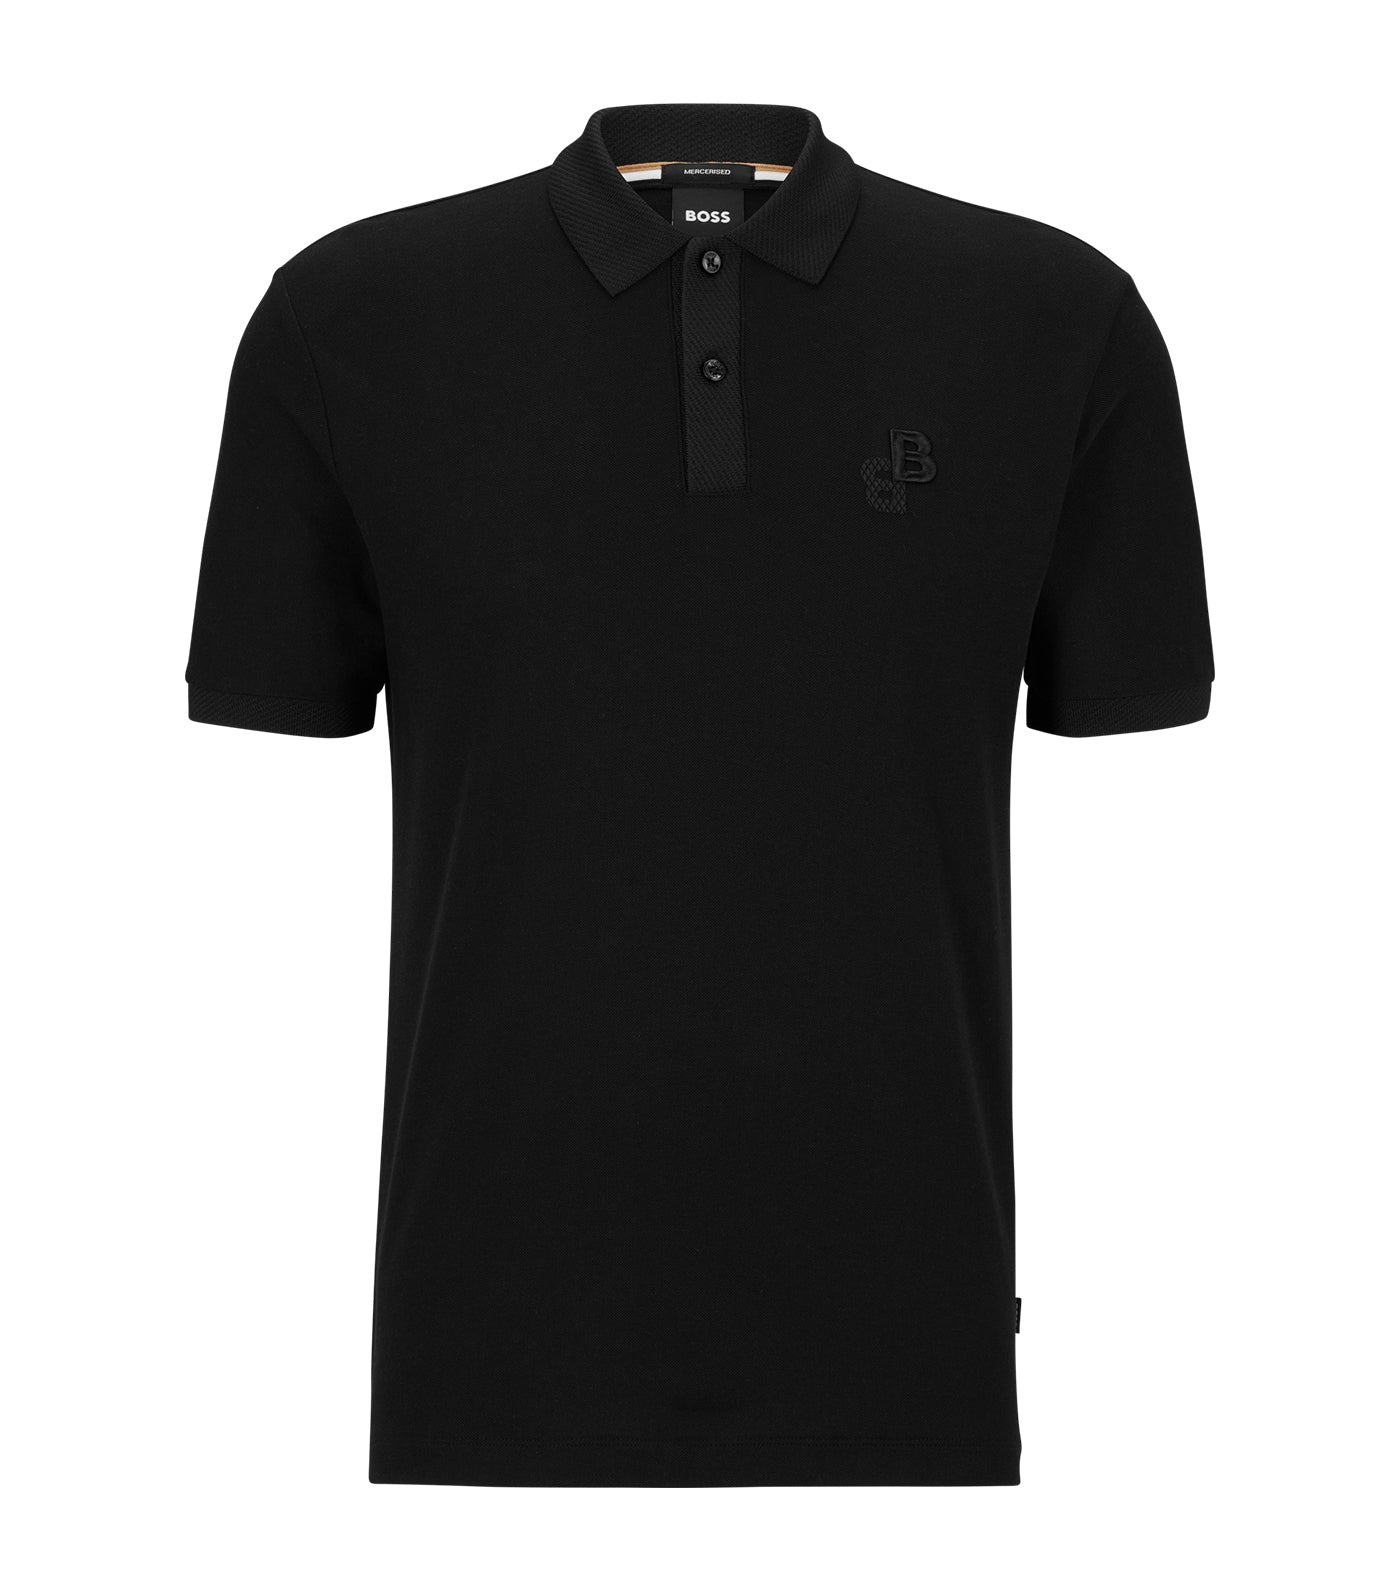 Parlay 191 Polo Shirt Black